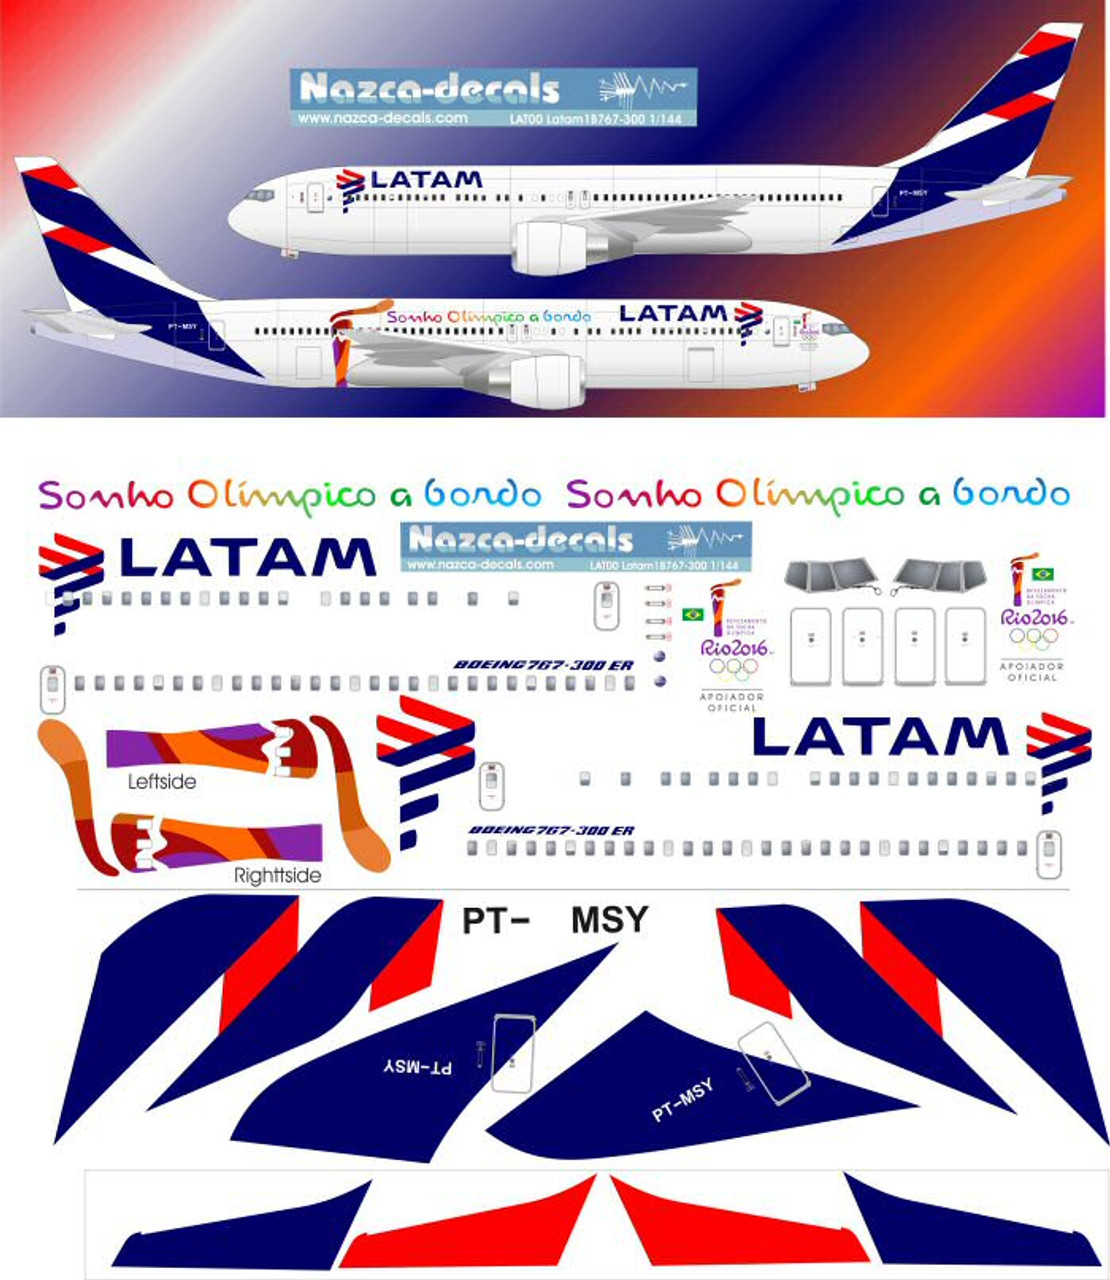 Latam Cargo Boeing 767 editorial stock image. Image of aviation - 140499924